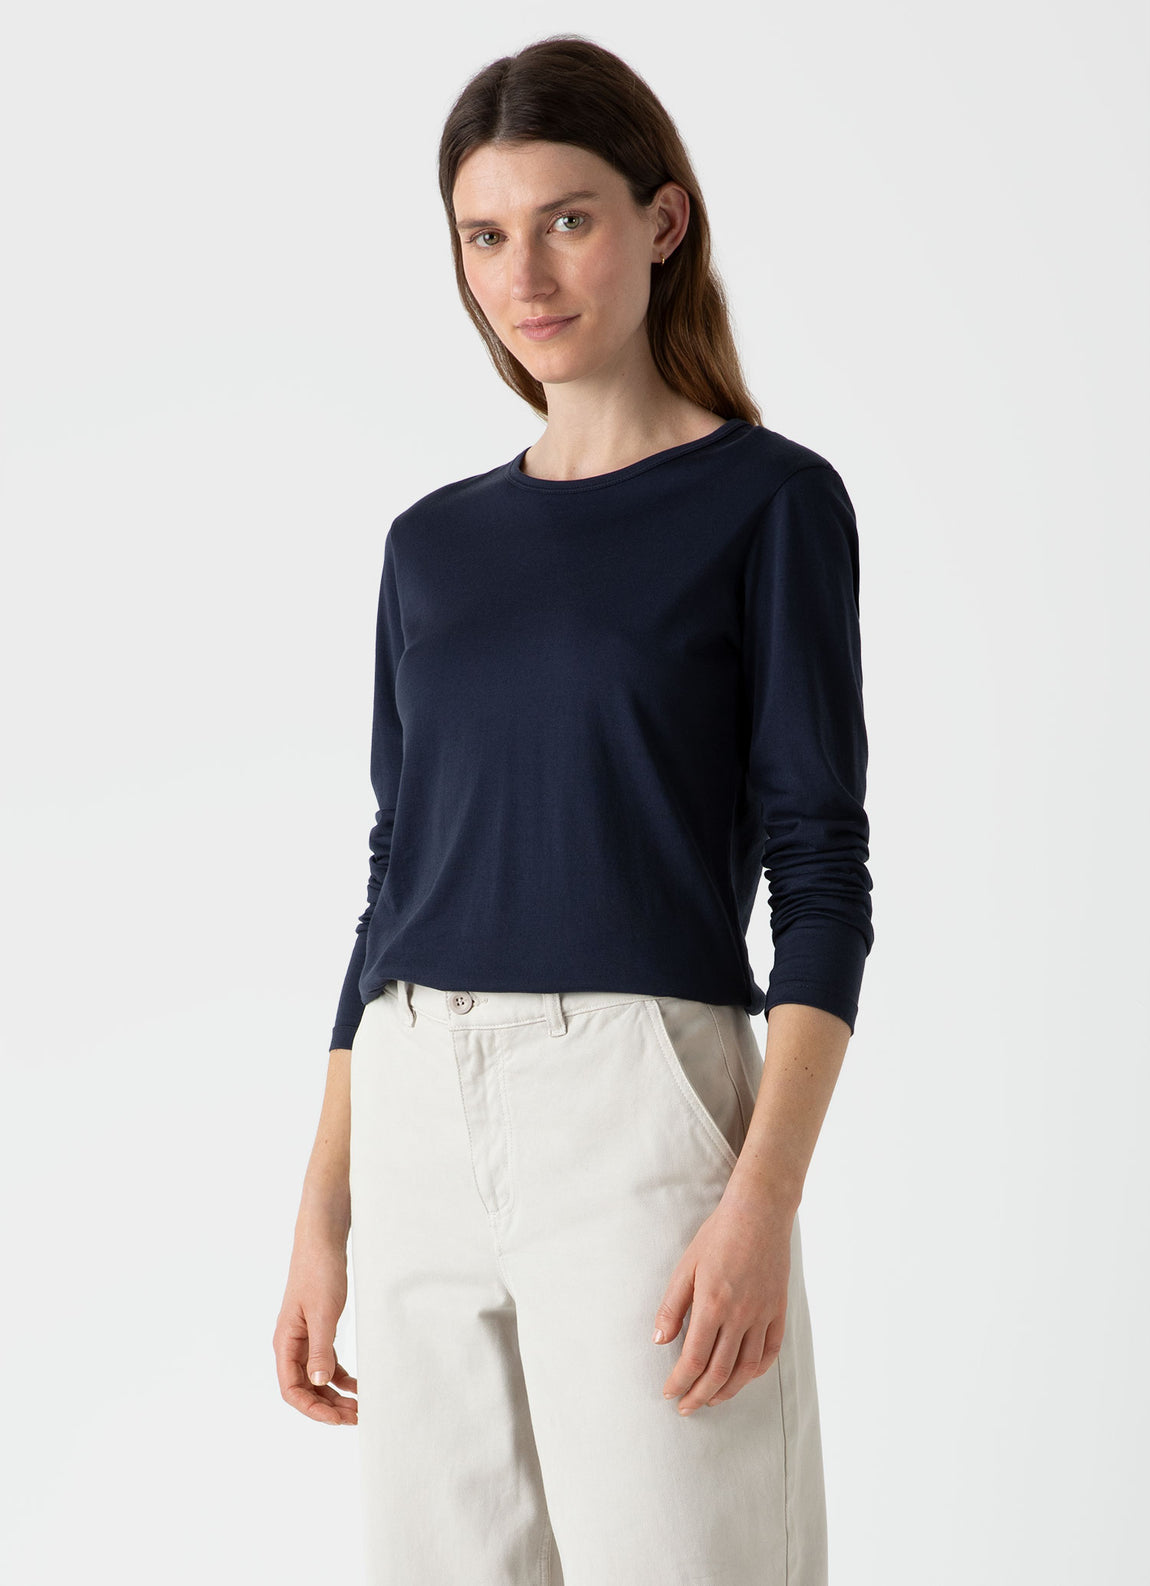 Women's Long Sleeve Classic T-shirt in Navy | Sunspel